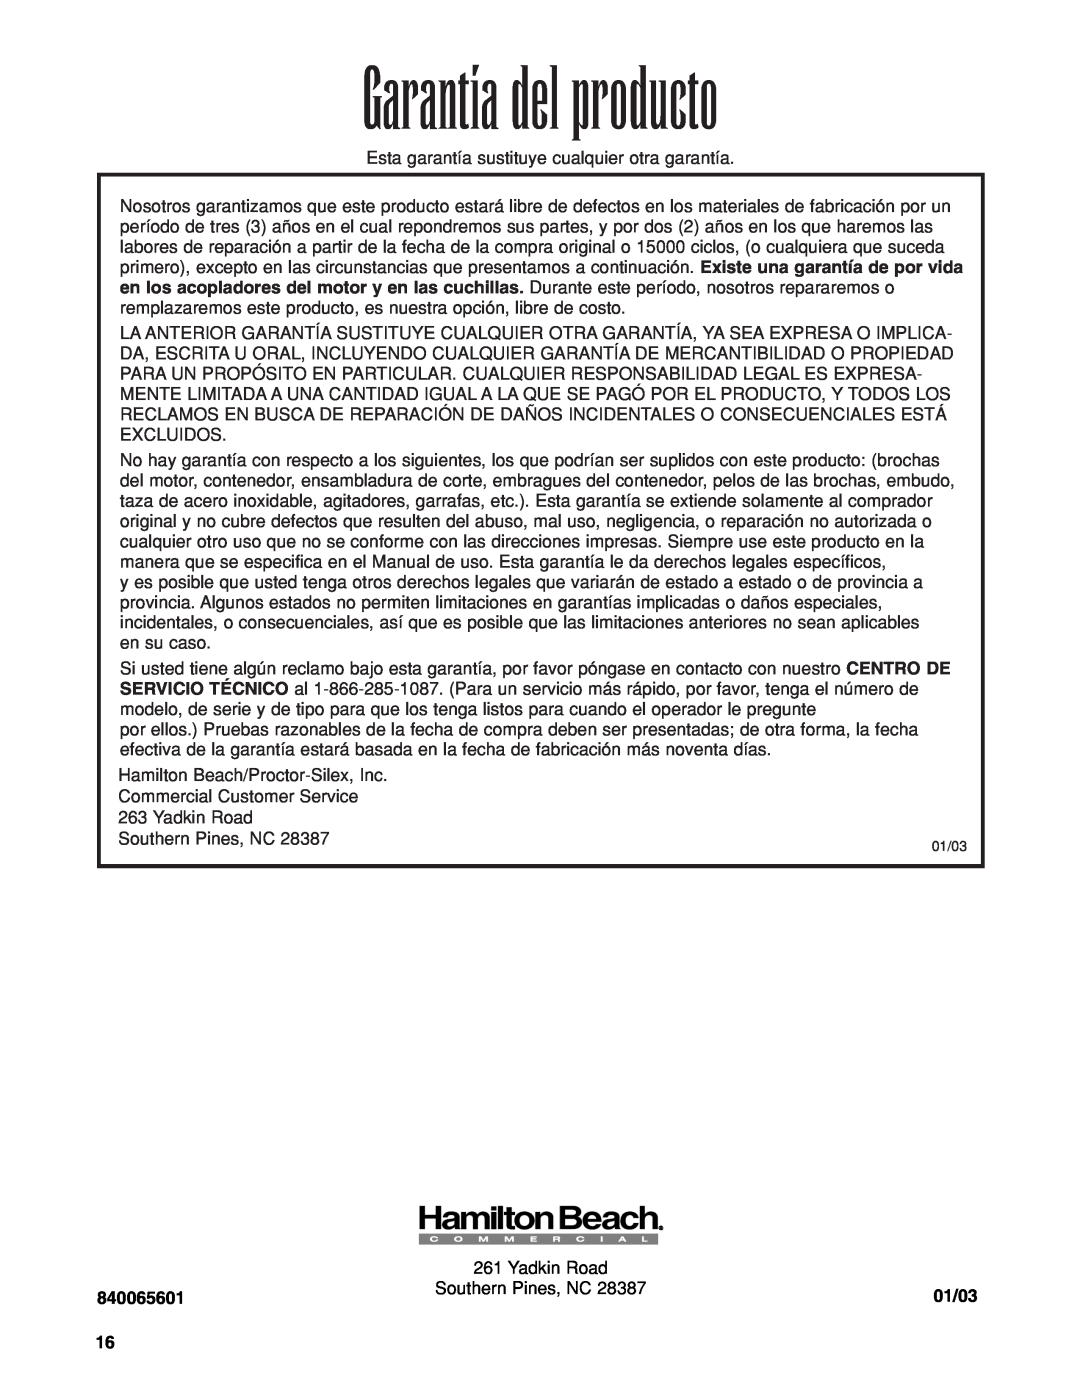 Hamilton Beach Tempest Series operation manual Garantía del producto, 840065601, 01/03 